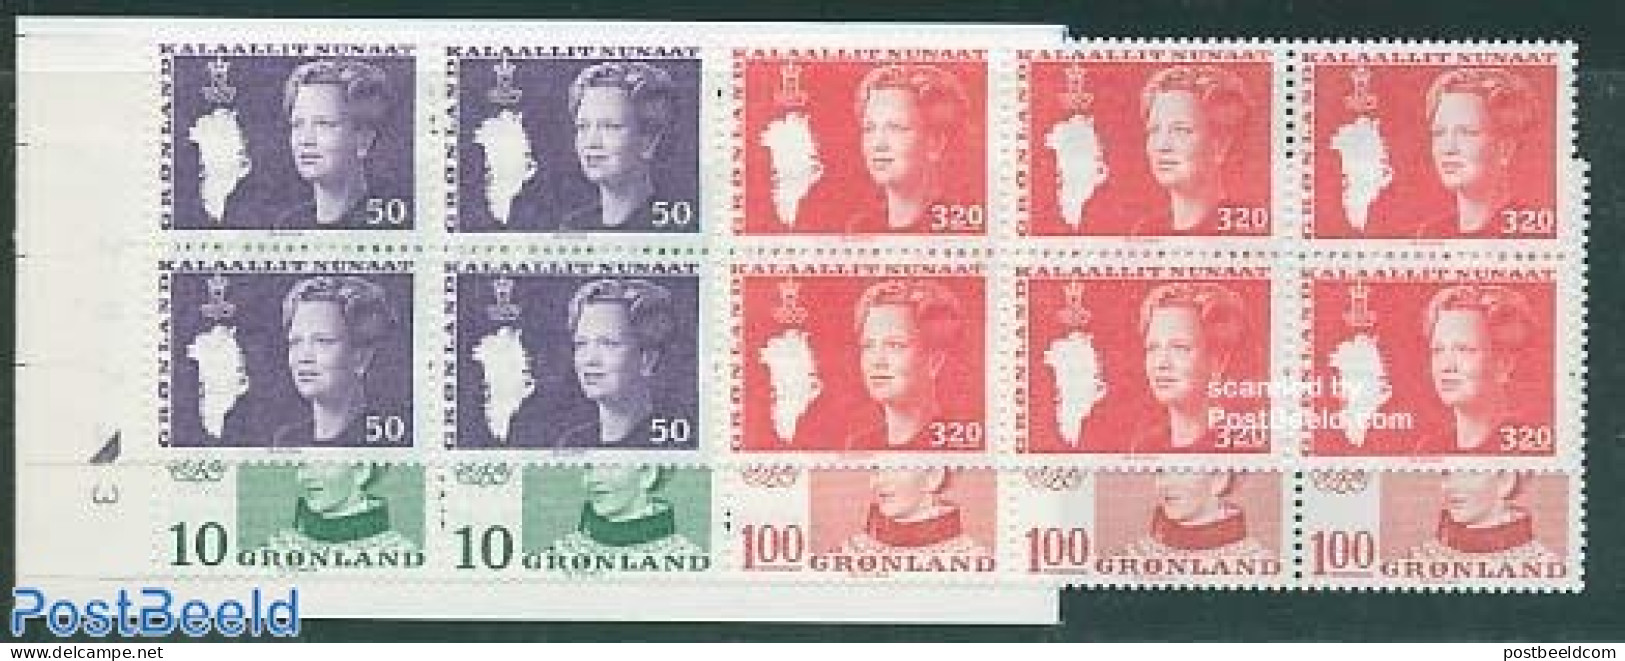 Greenland 1989 Definitives Booklet, Mint NH, Stamp Booklets - Unused Stamps